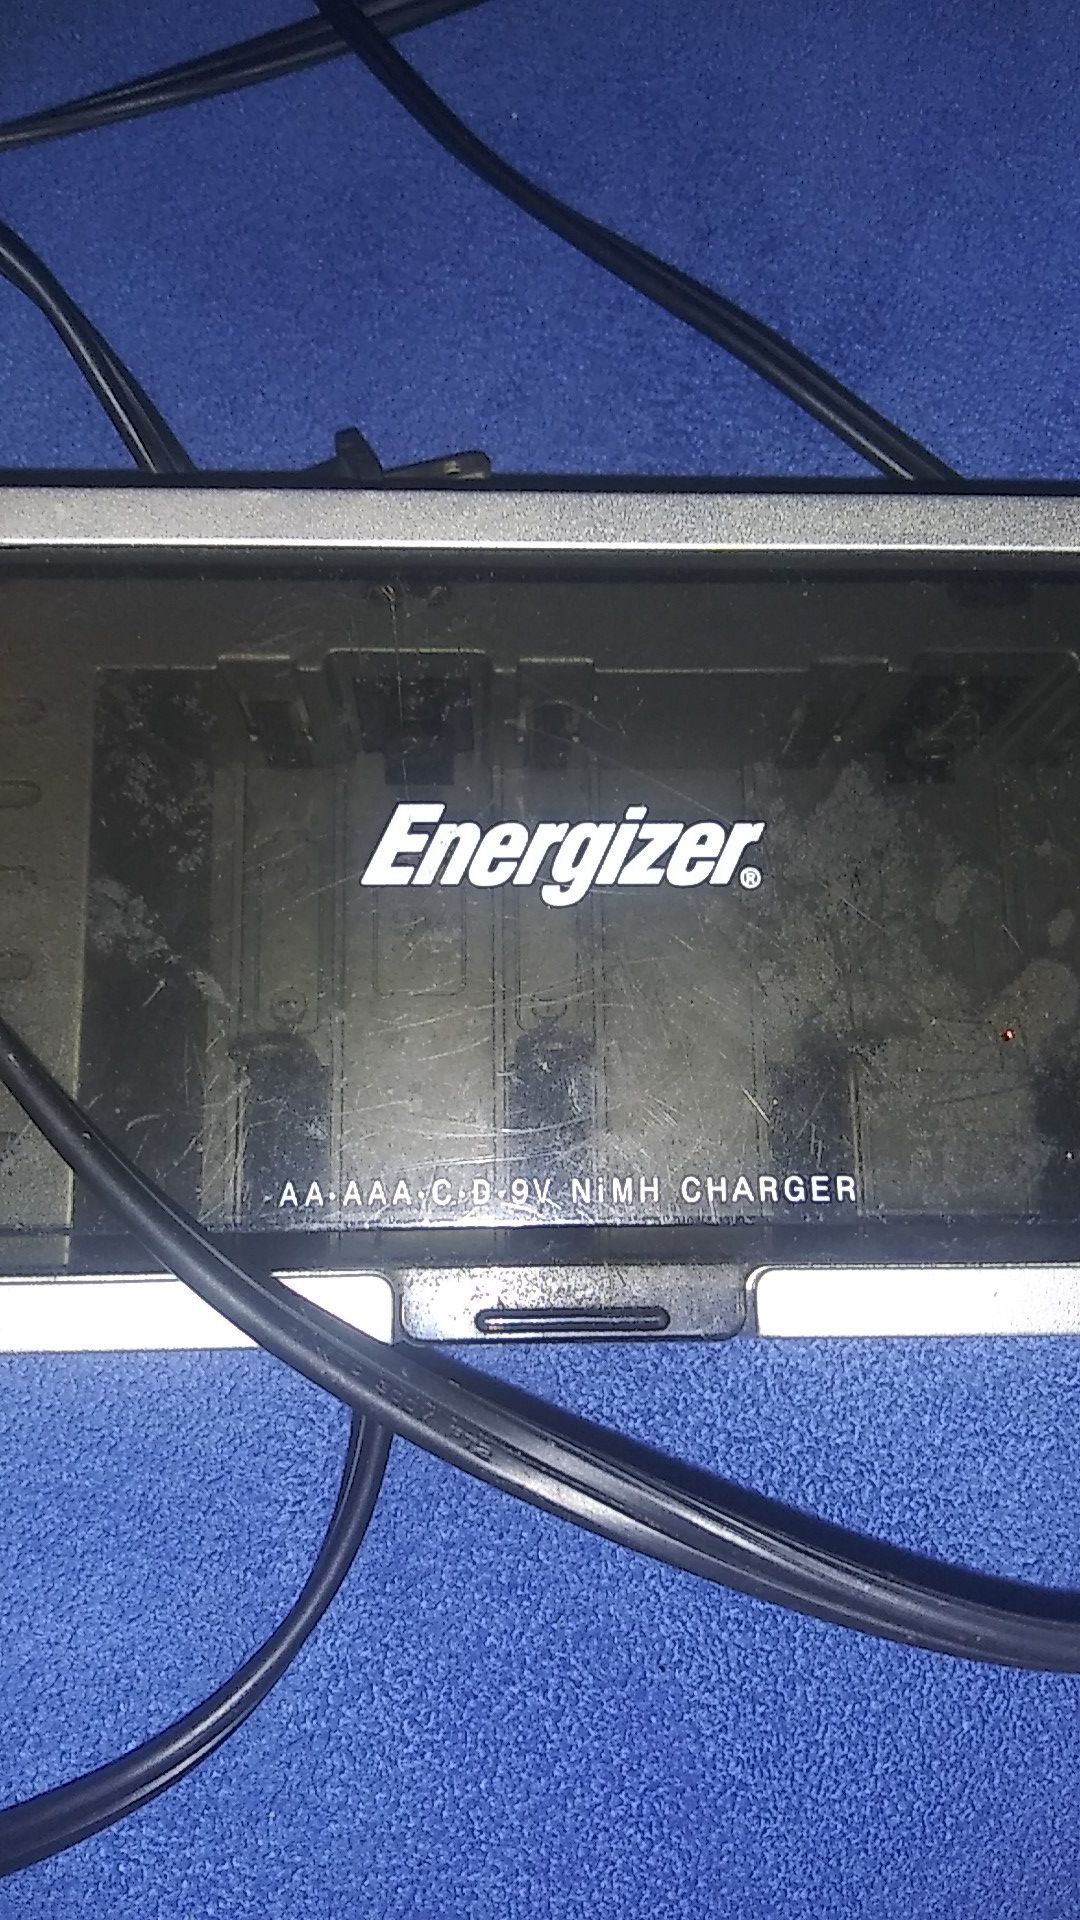 Energizer charging case